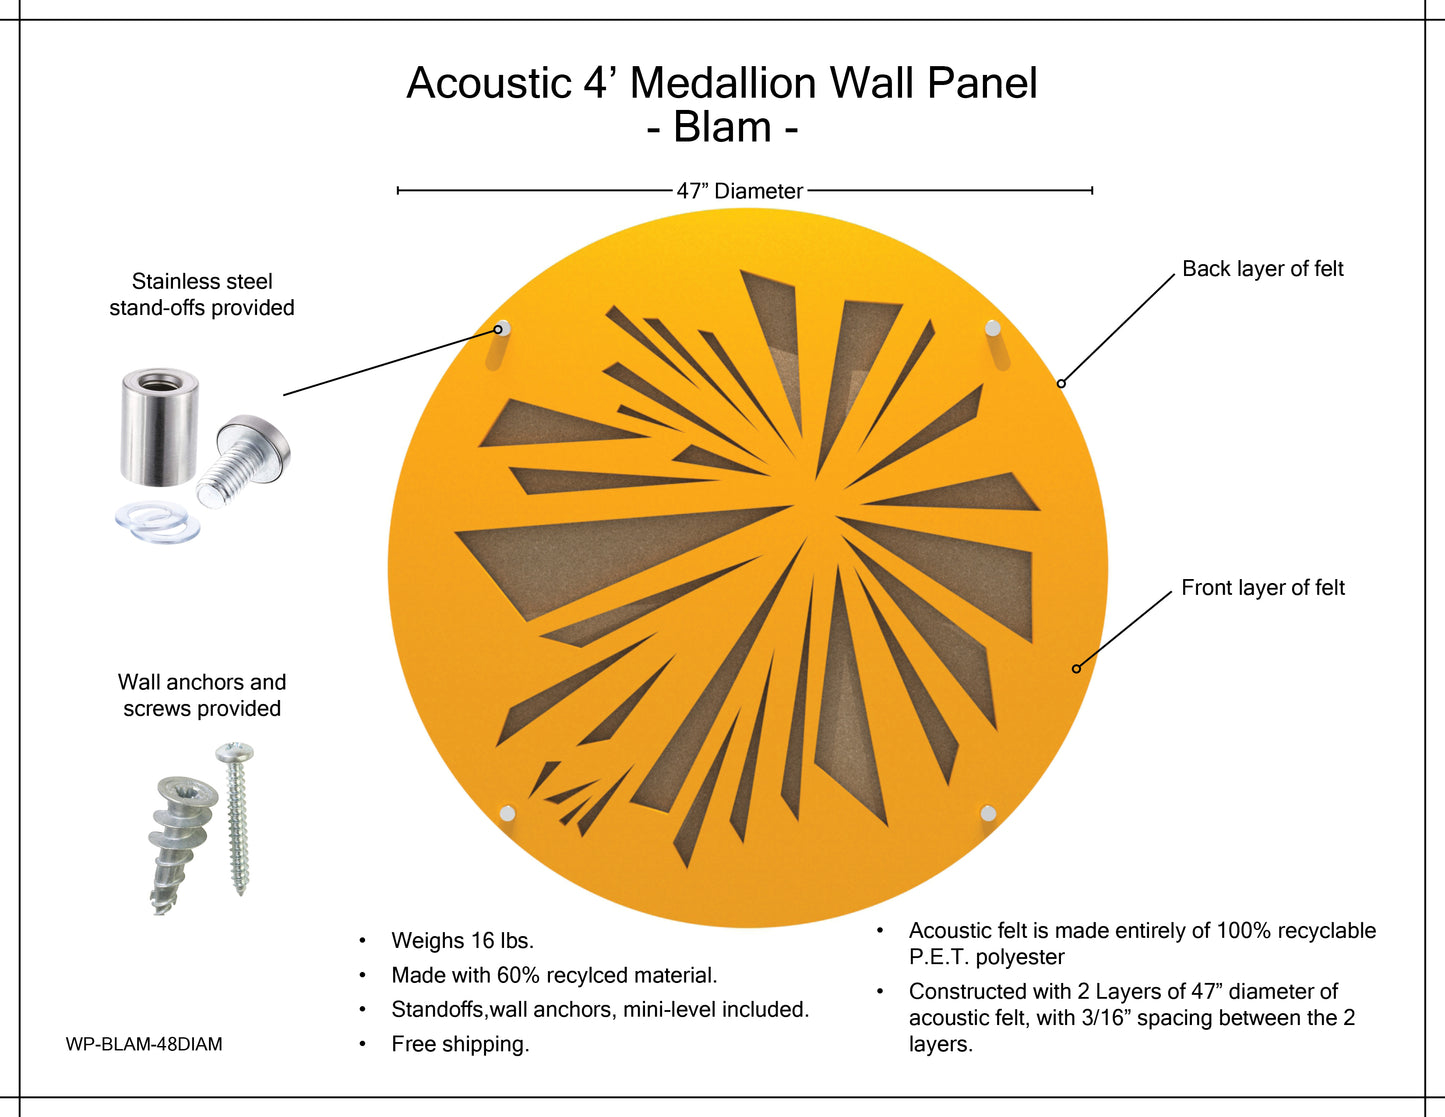 Medallion Acoustic Wall Panel - Blam